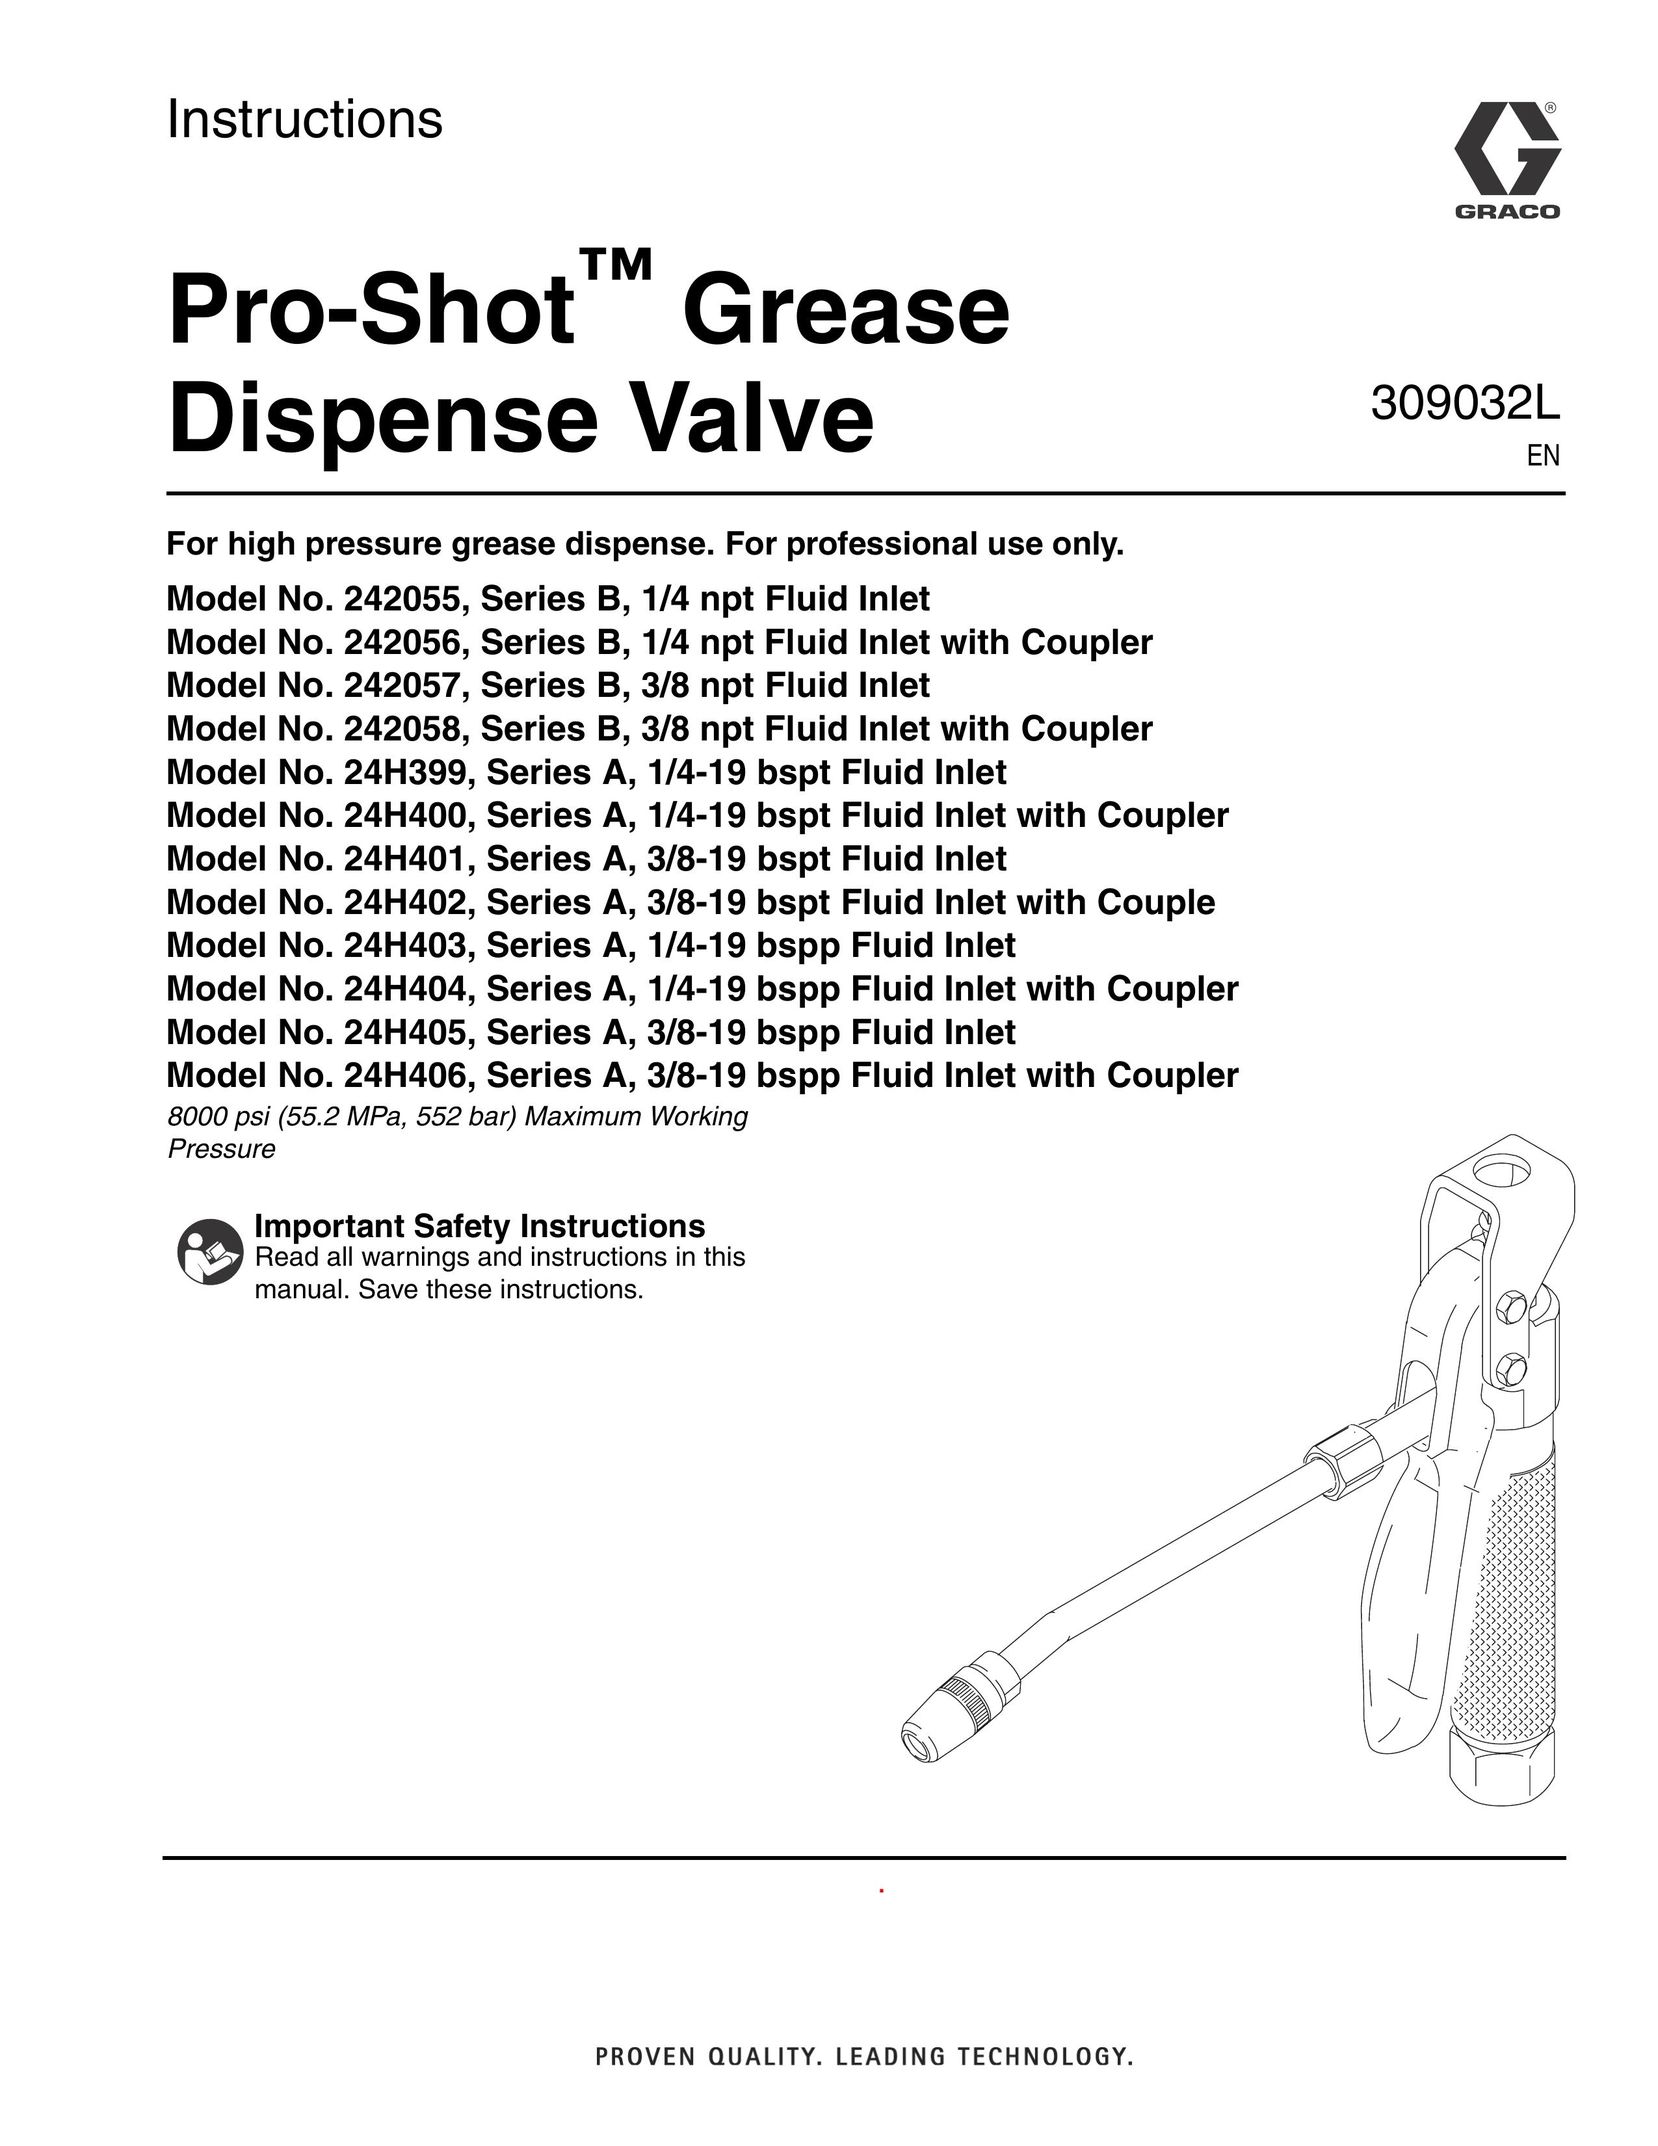 Graco 242057 Glue Gun User Manual